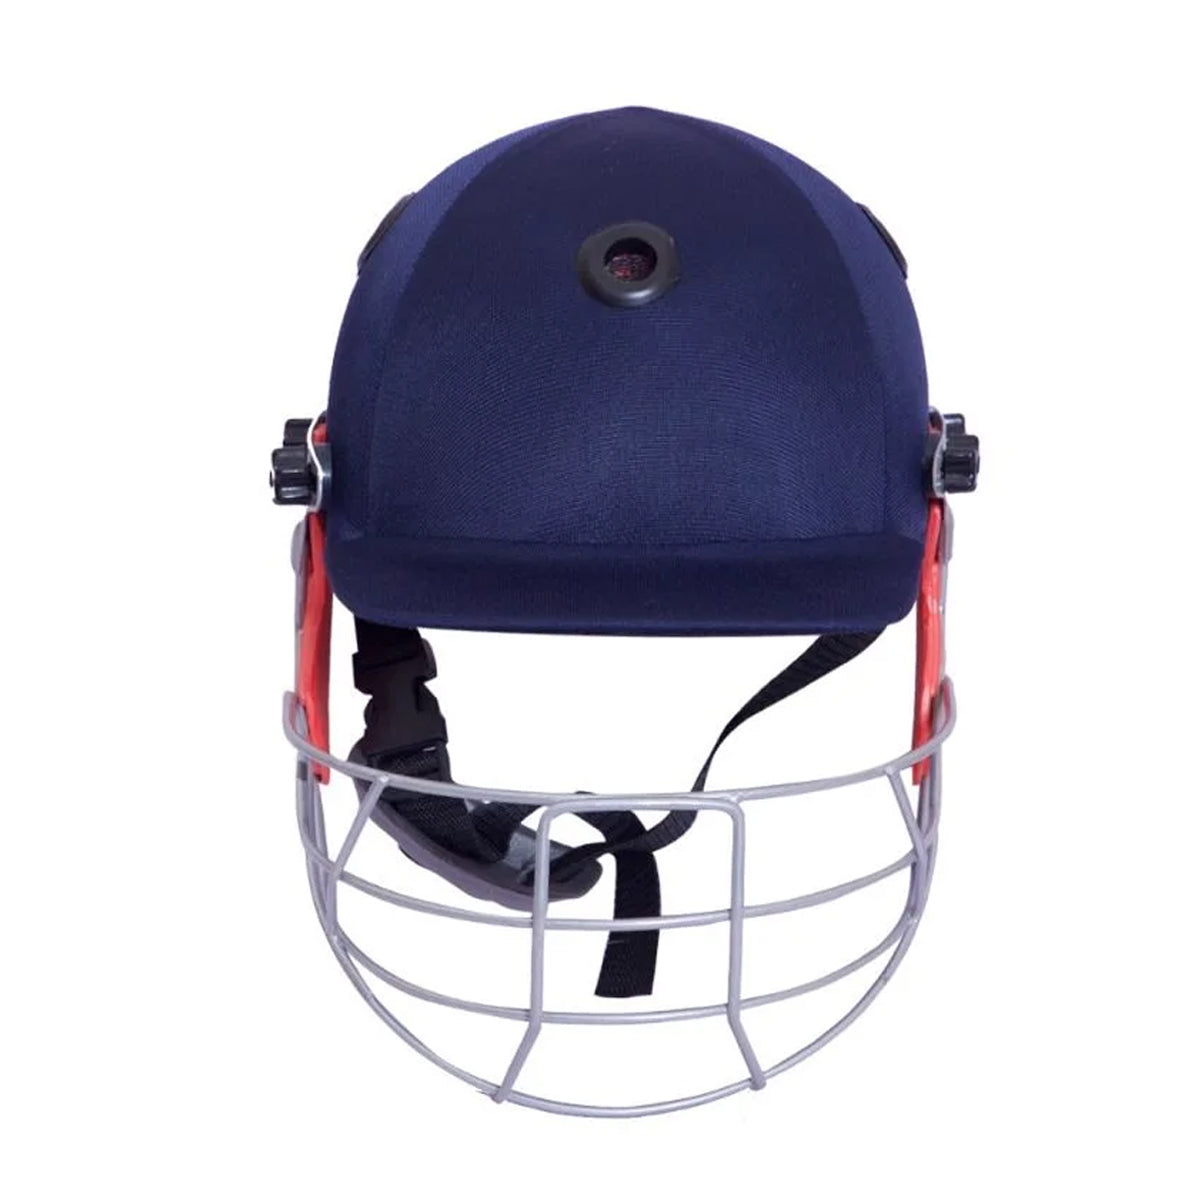 SS Slasher Cricket Helmet - Best Price online Prokicksports.com